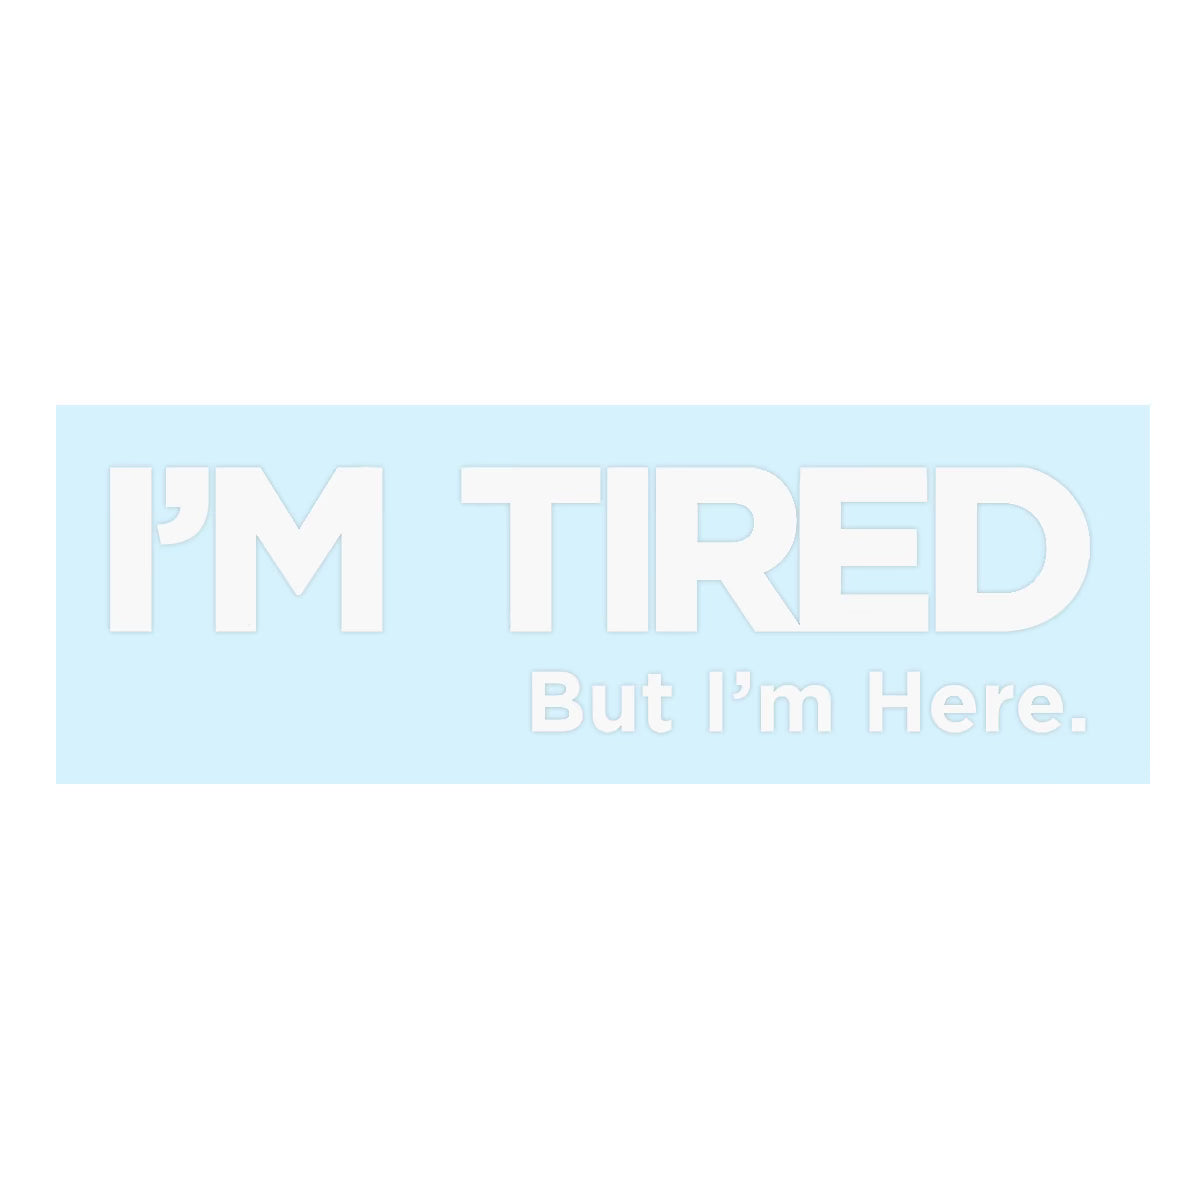 I'm Tired But I'm Here® Vinyl Sticker